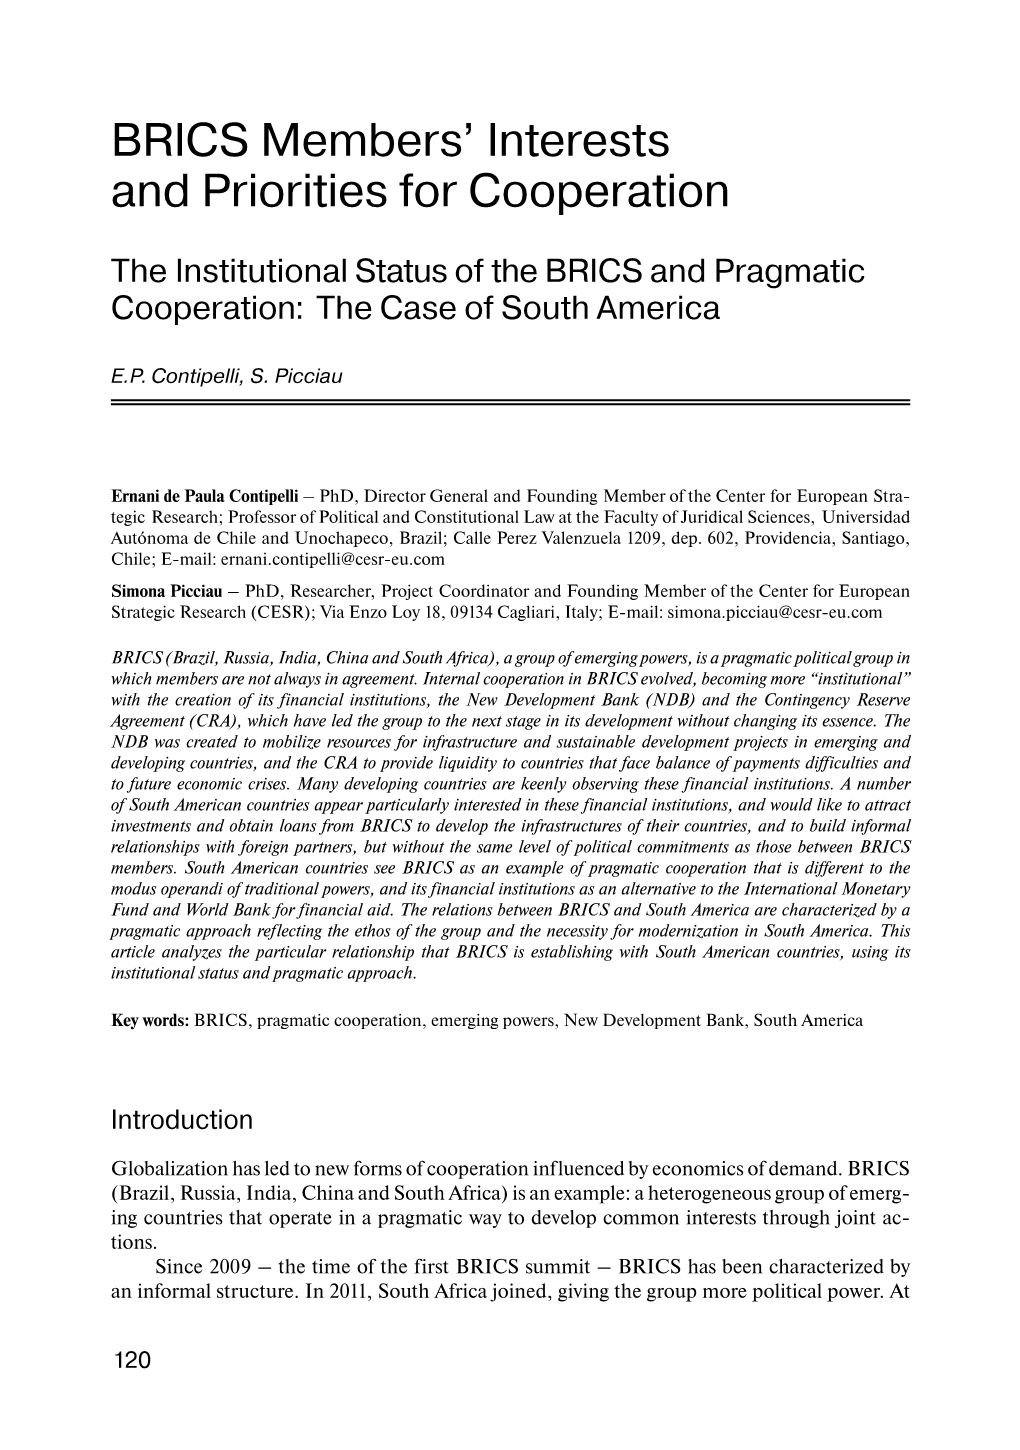 E. Contipelli, S. Piccian, the Institutional Status of the BRICS And